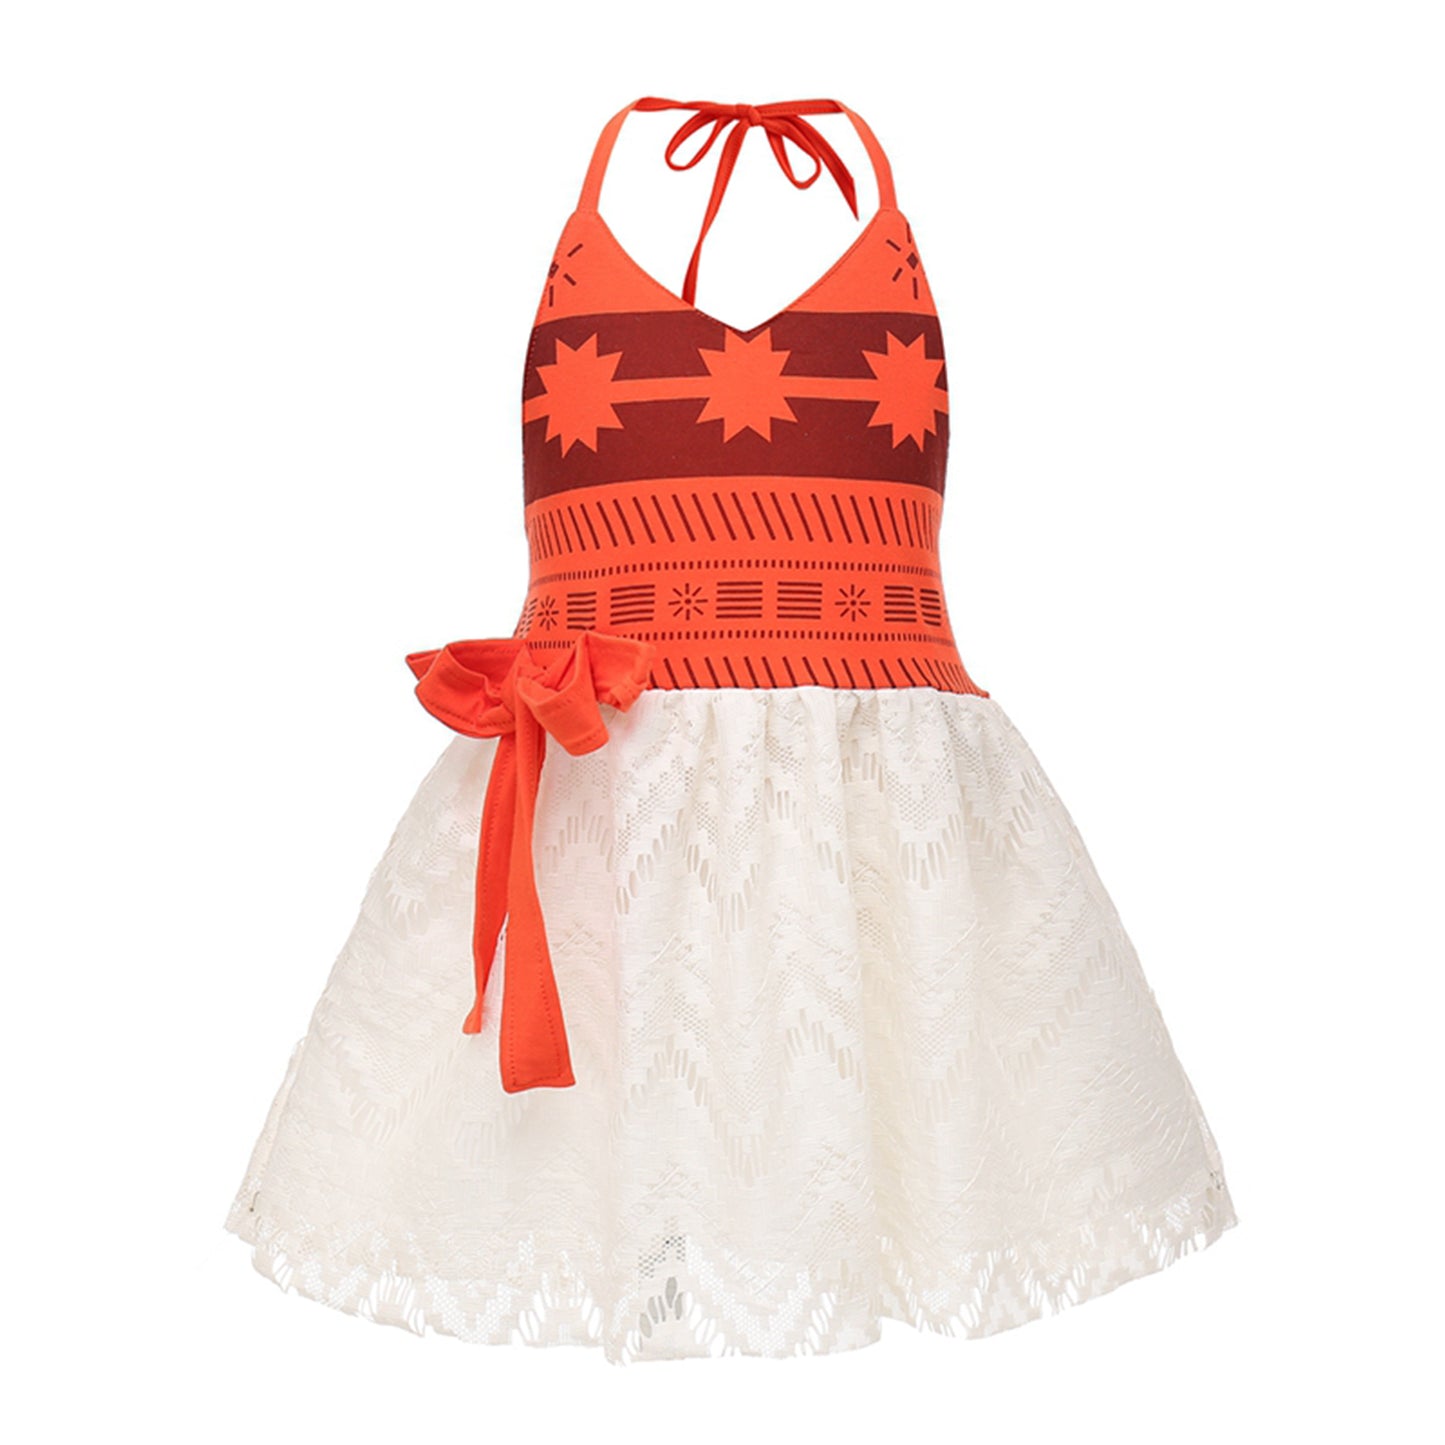 Foierp Costume Dress Slip Lace Summer Beach Daily Wear Dress for Baby Girls 1-4 Years